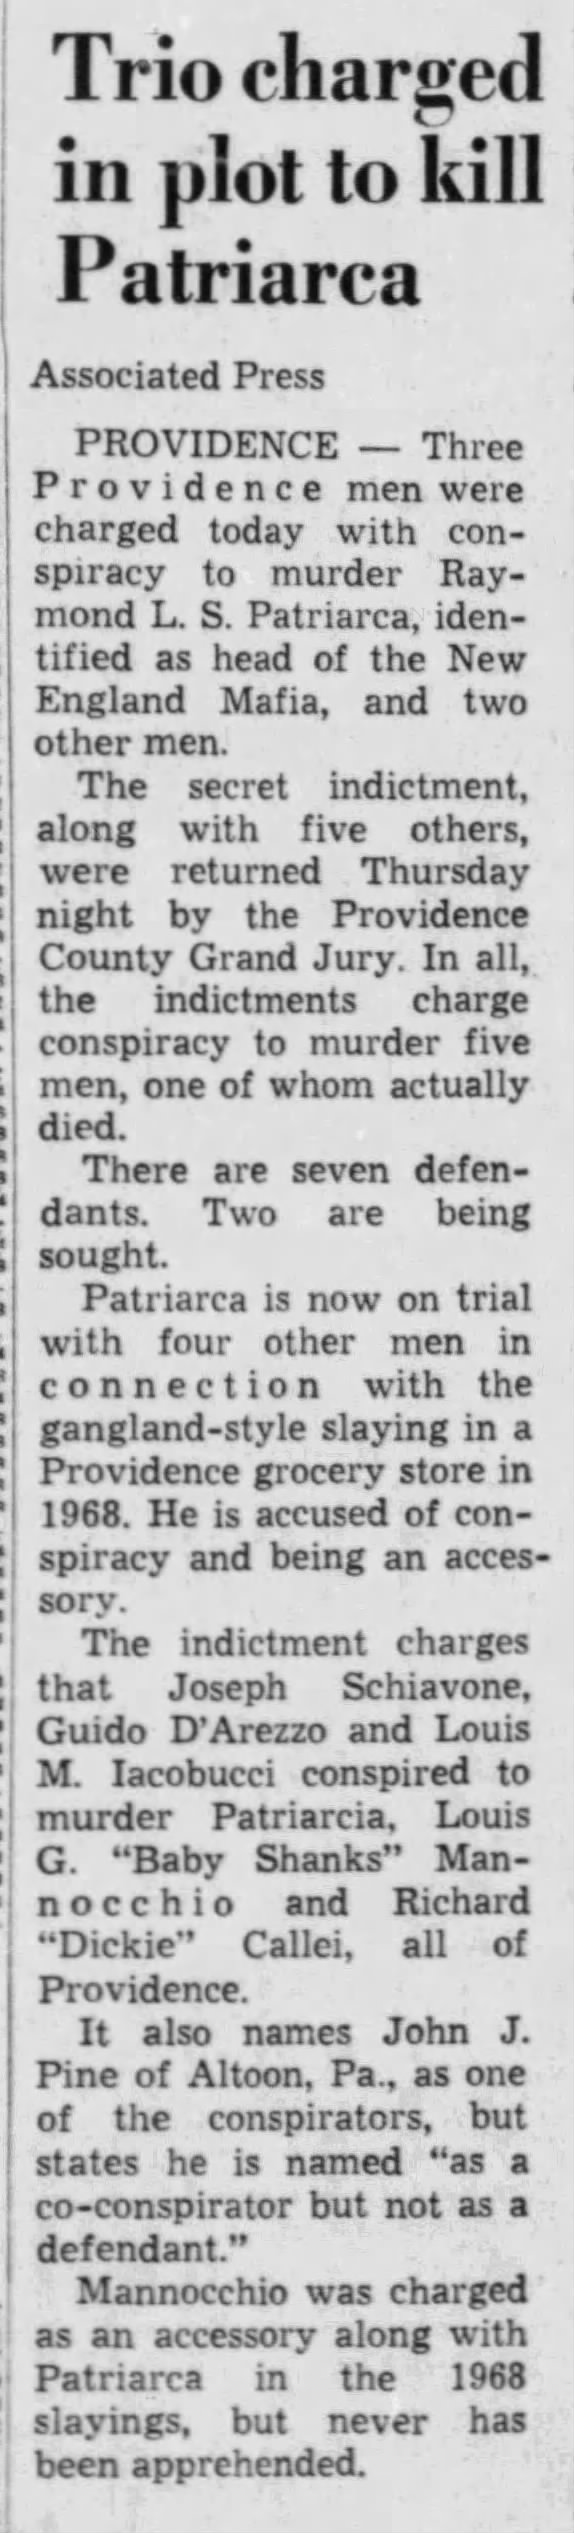 Patriarca murder plot (27 Feb 1970)